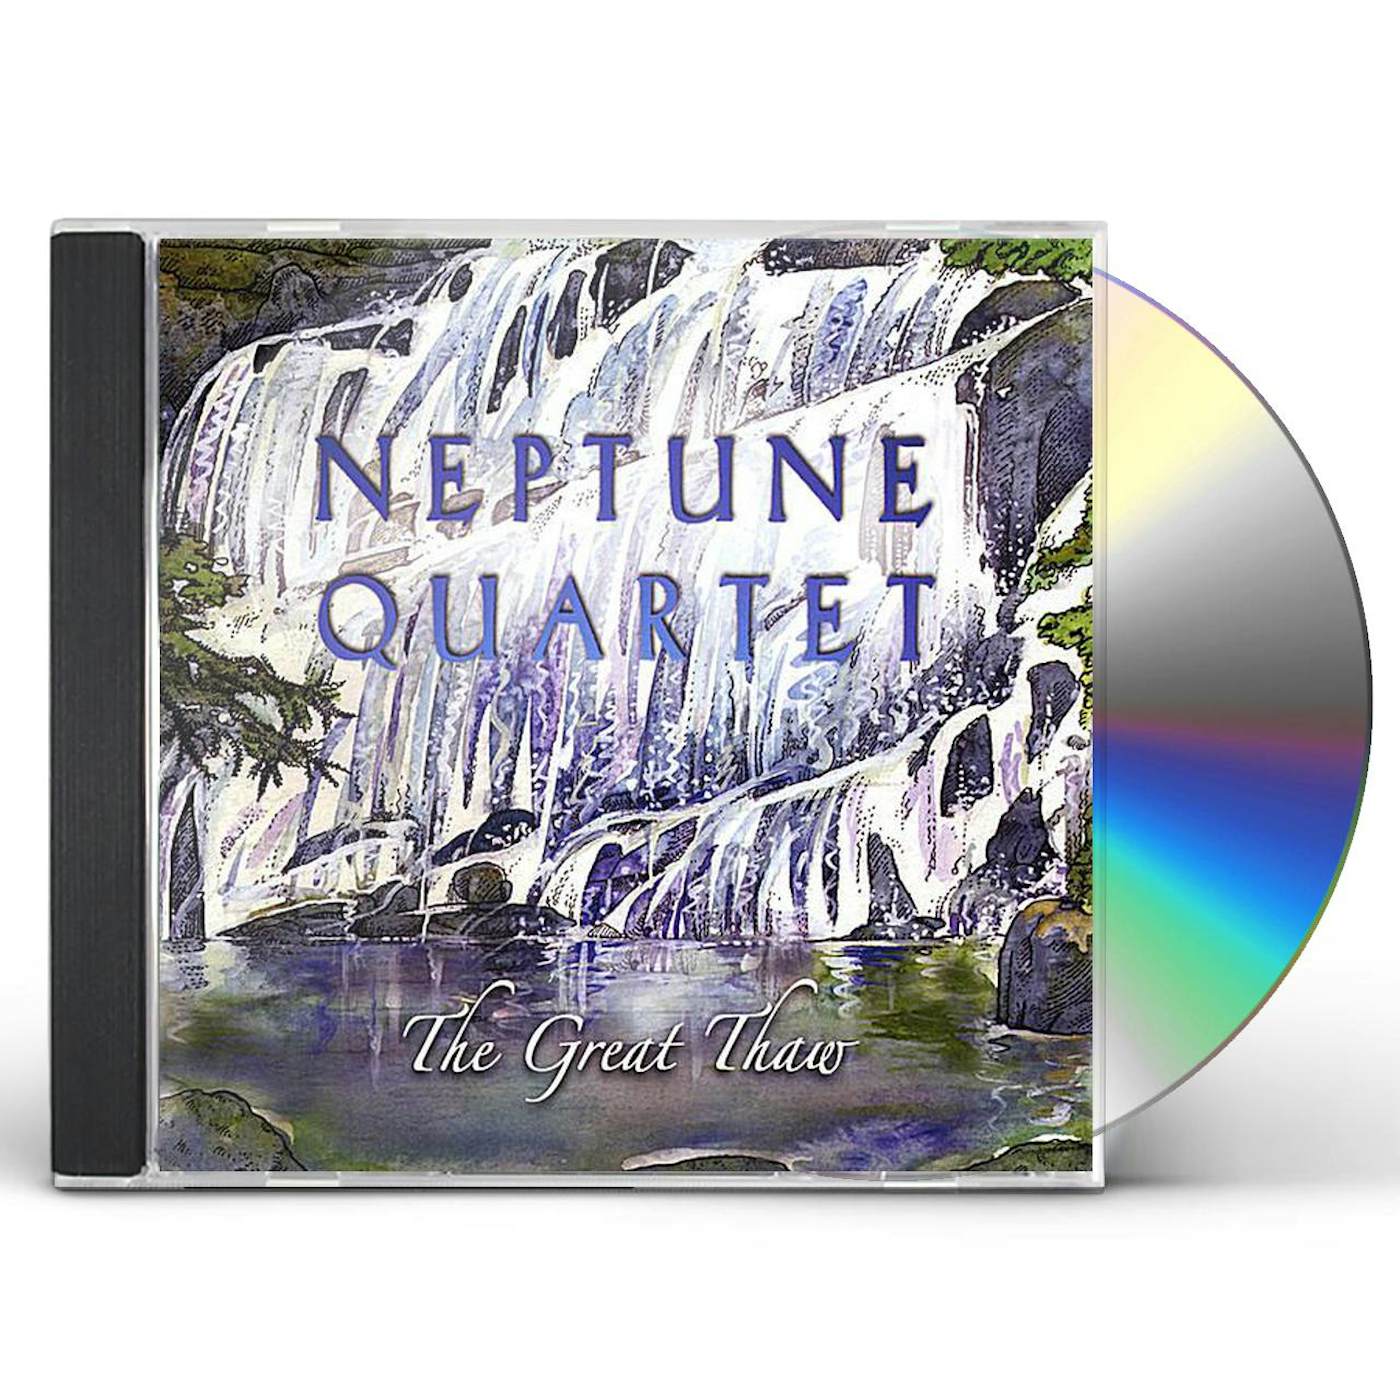 The Neptune Quartet GREAT THAW CD